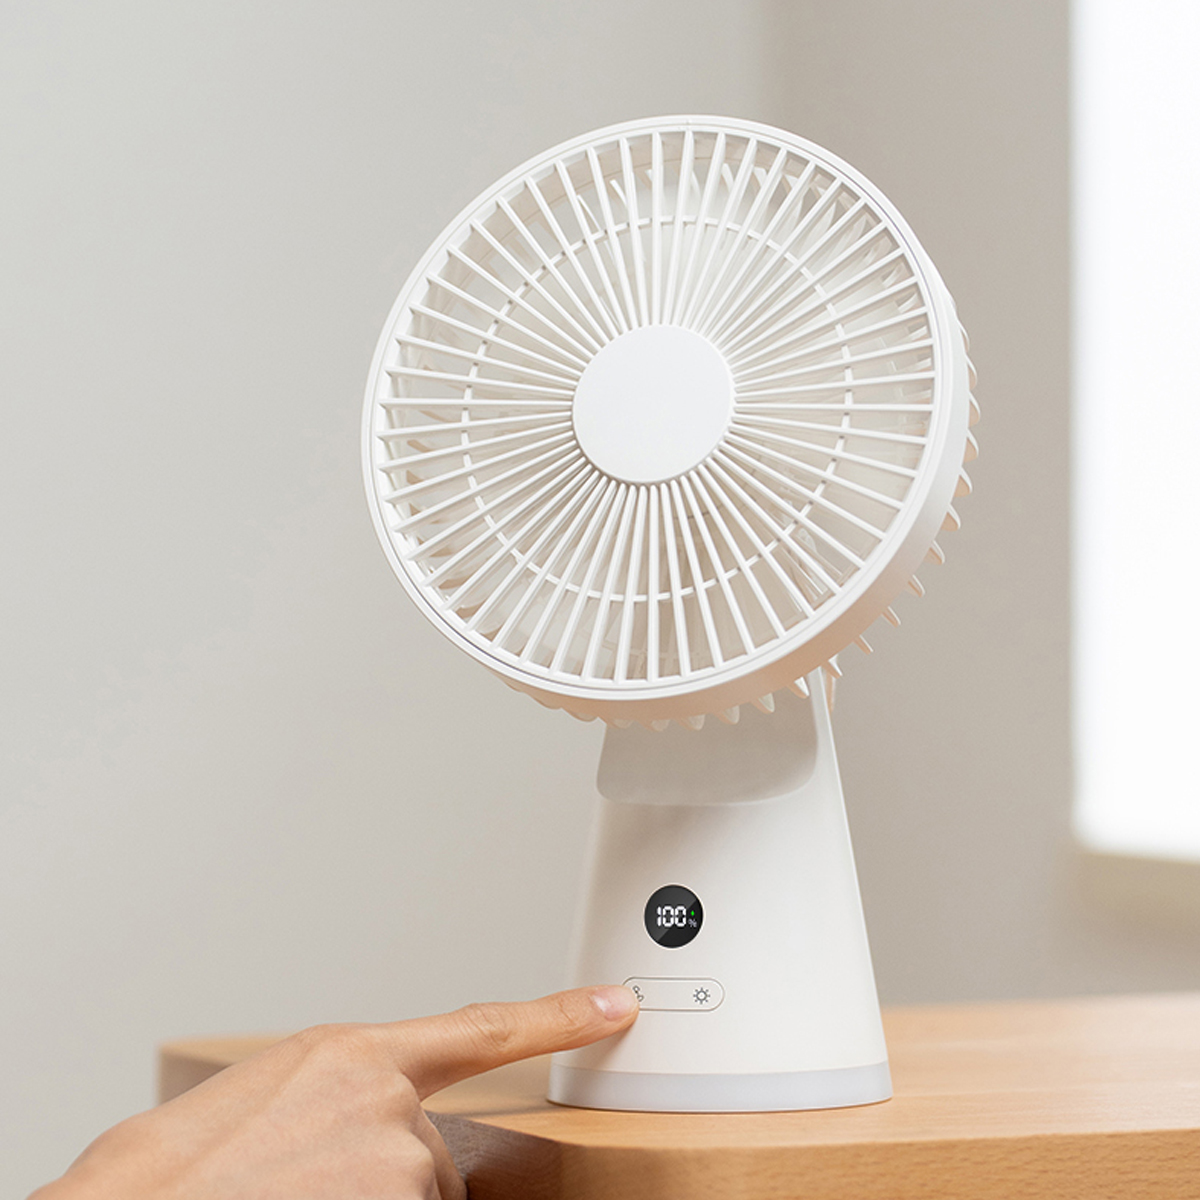 Convenient Desk Fan: Your Ultimate Companion for Cooling Comfort